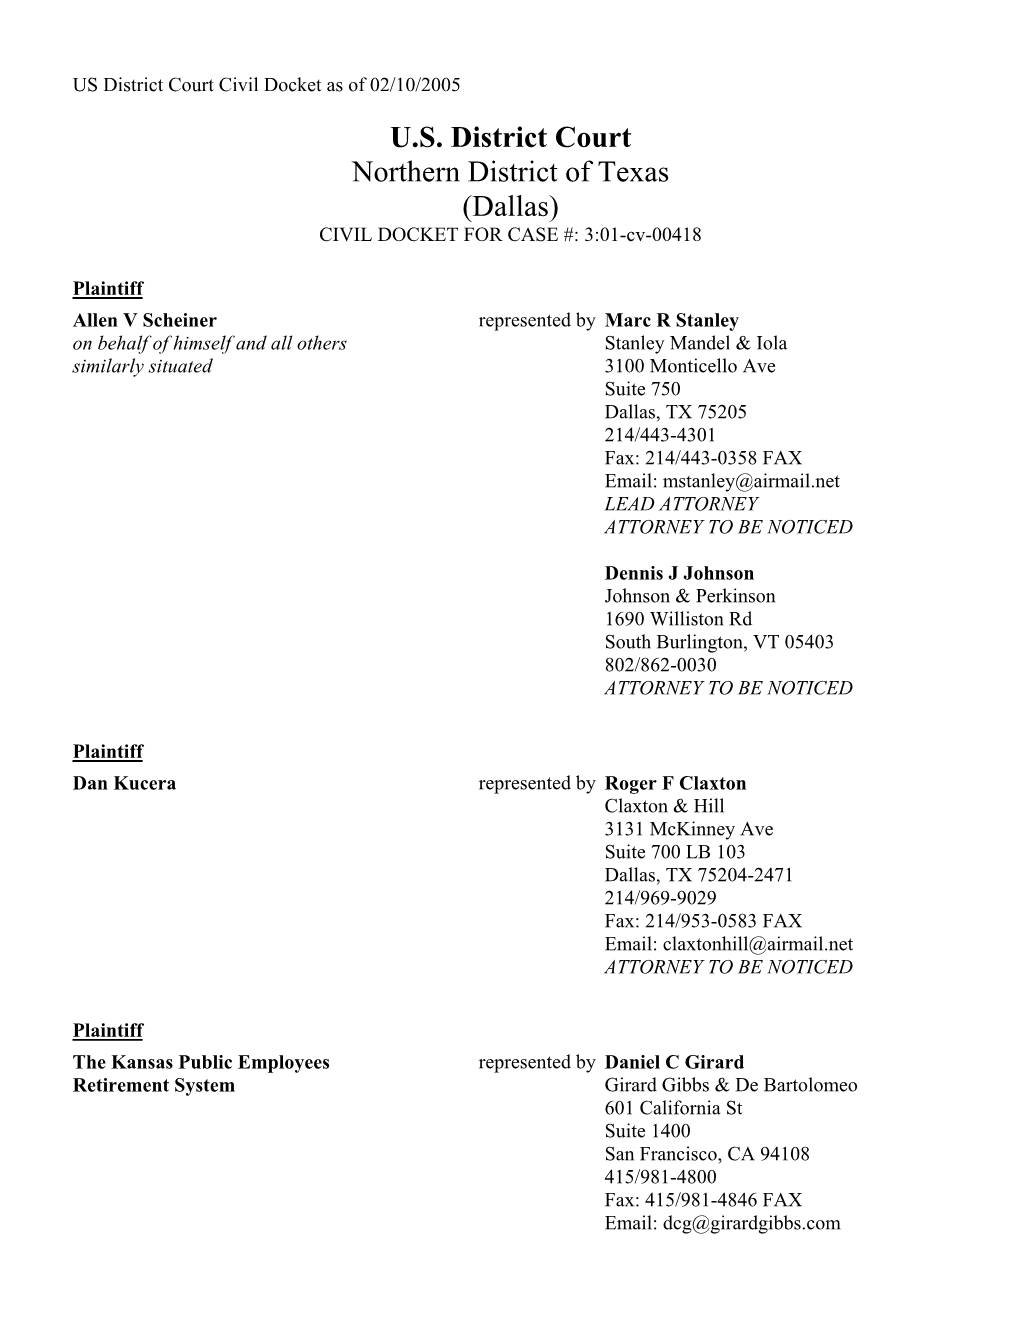 U.S. District Court Northern District of Texas (Dallas) CIVIL DOCKET for CASE #: 3:01-Cv-00418